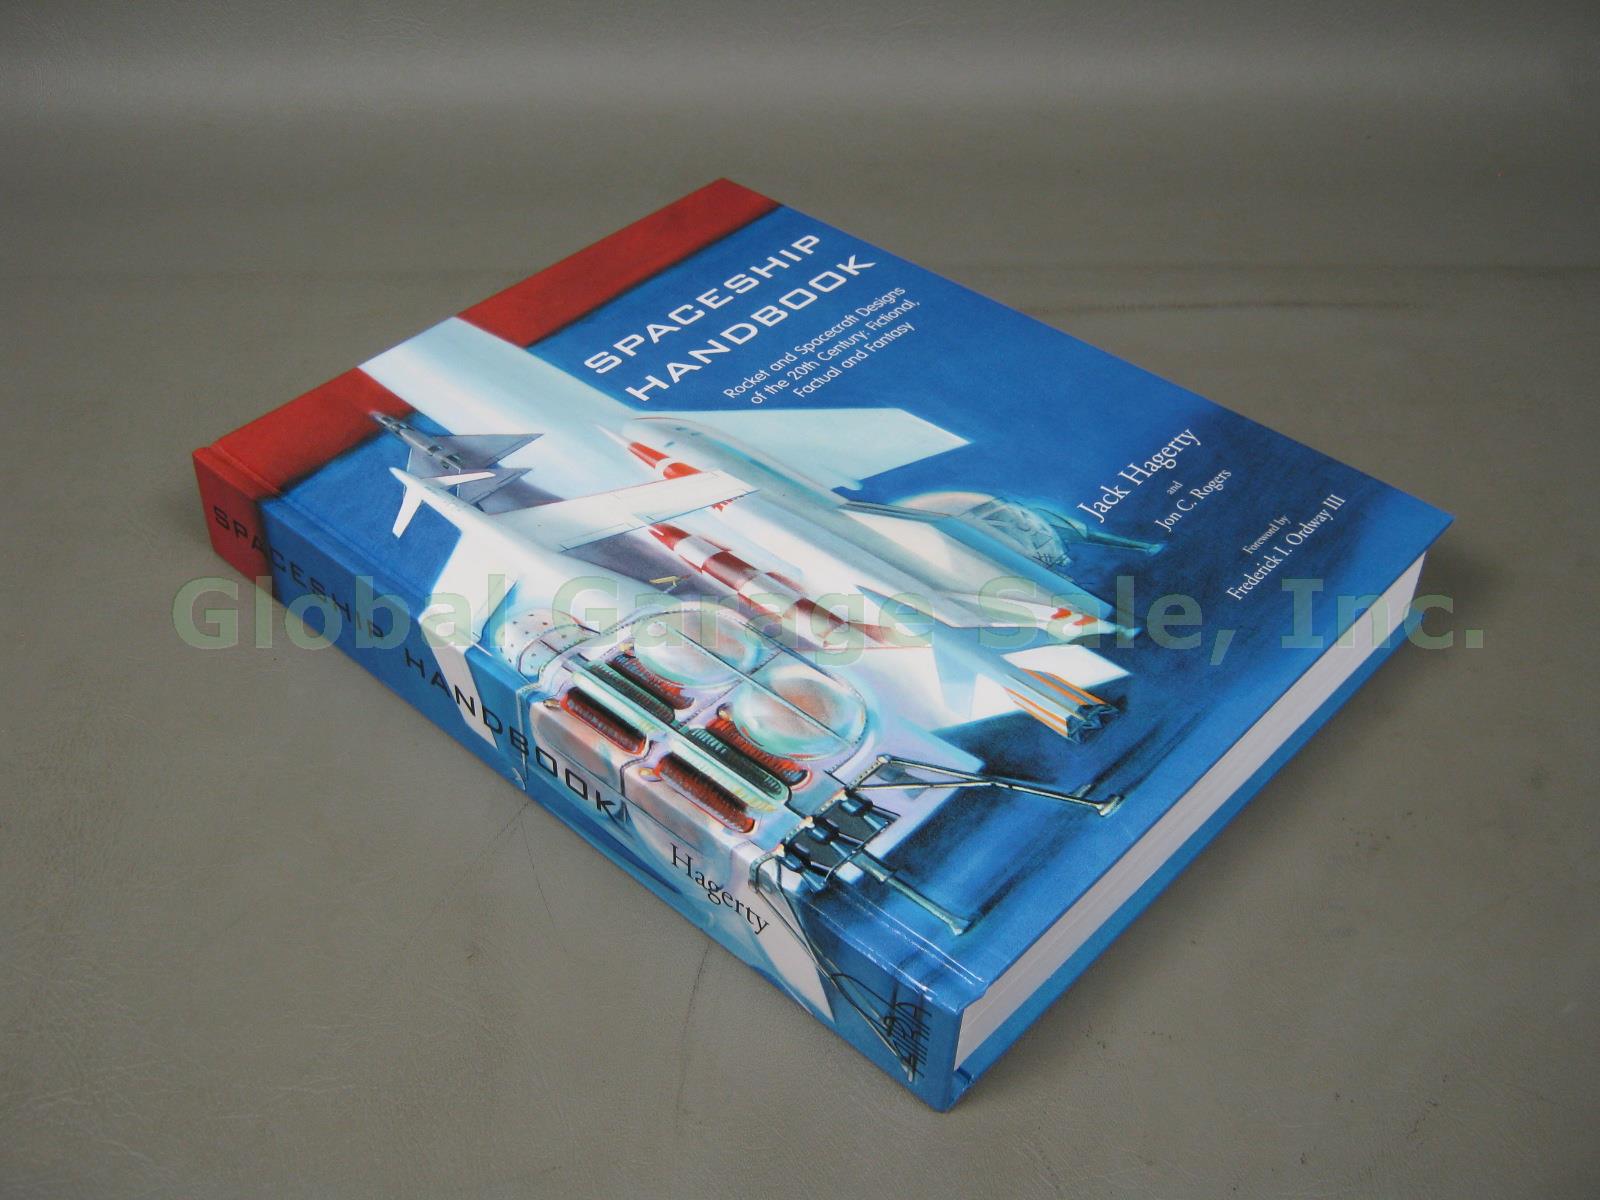 Spaceship Handbook Rocket Spacecraft Designs 20th Century Jack Hagerty Rogers NR